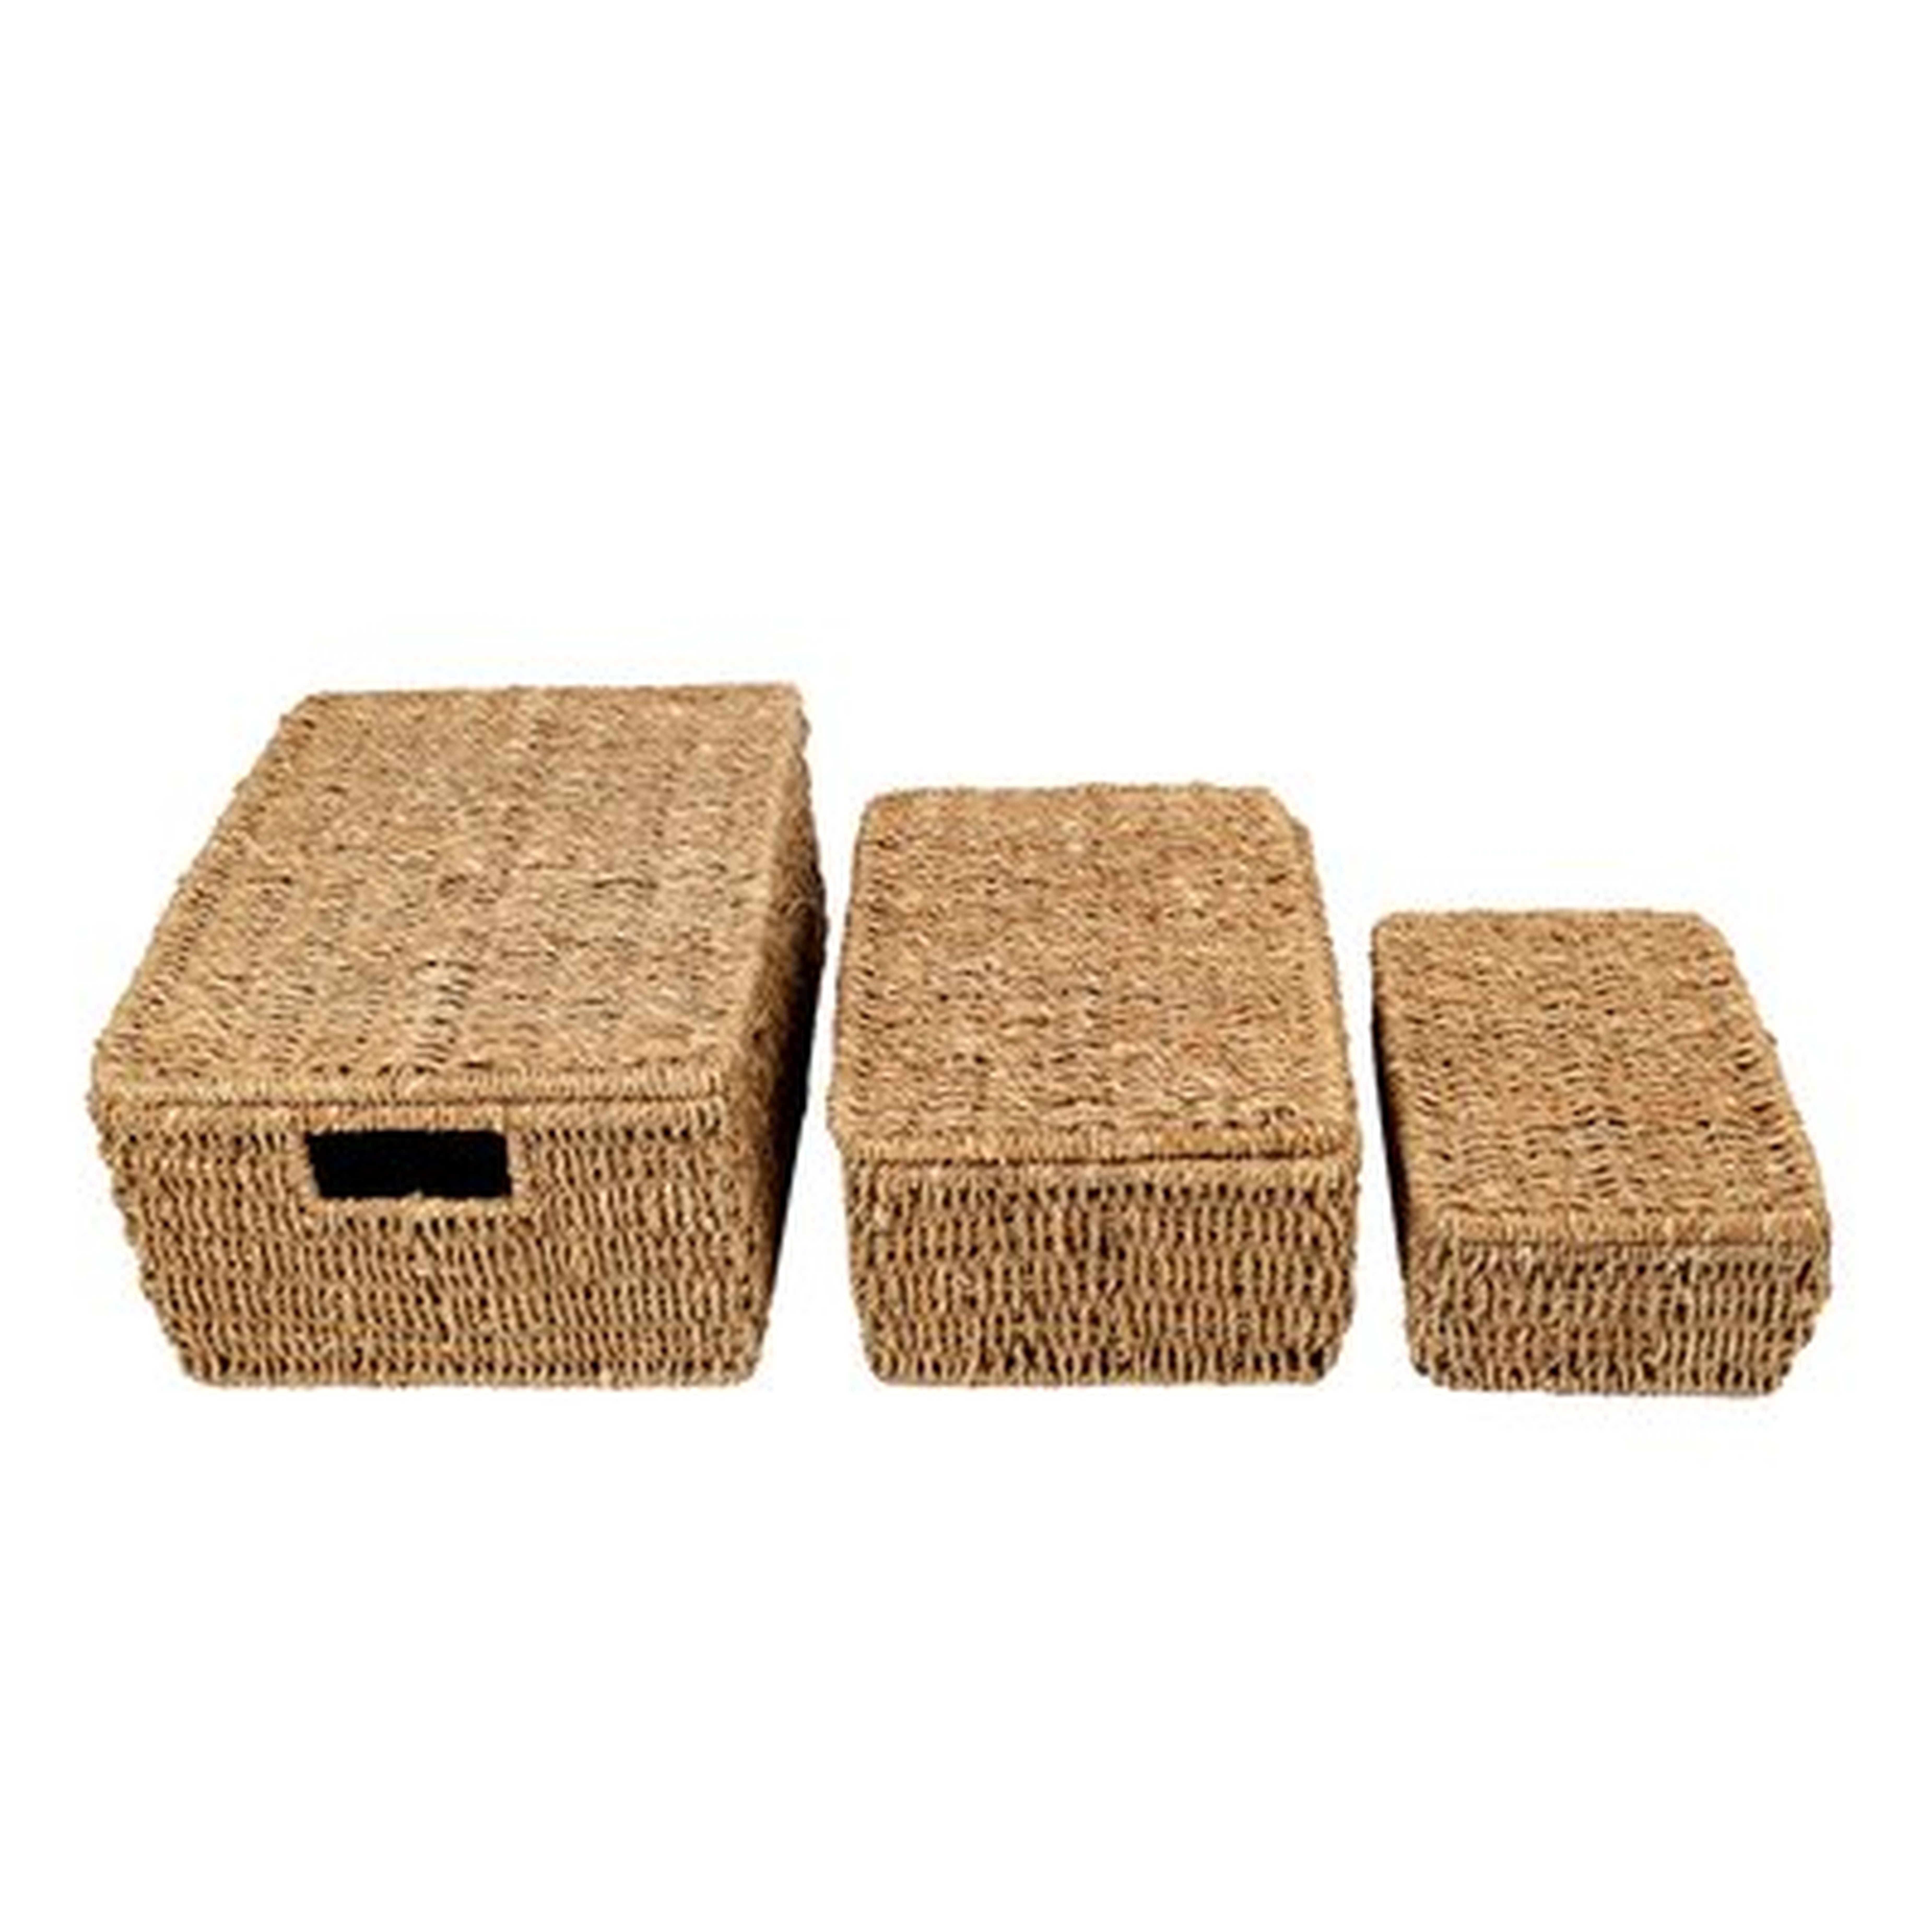 Storage Seagrass Wicker Box - Wayfair